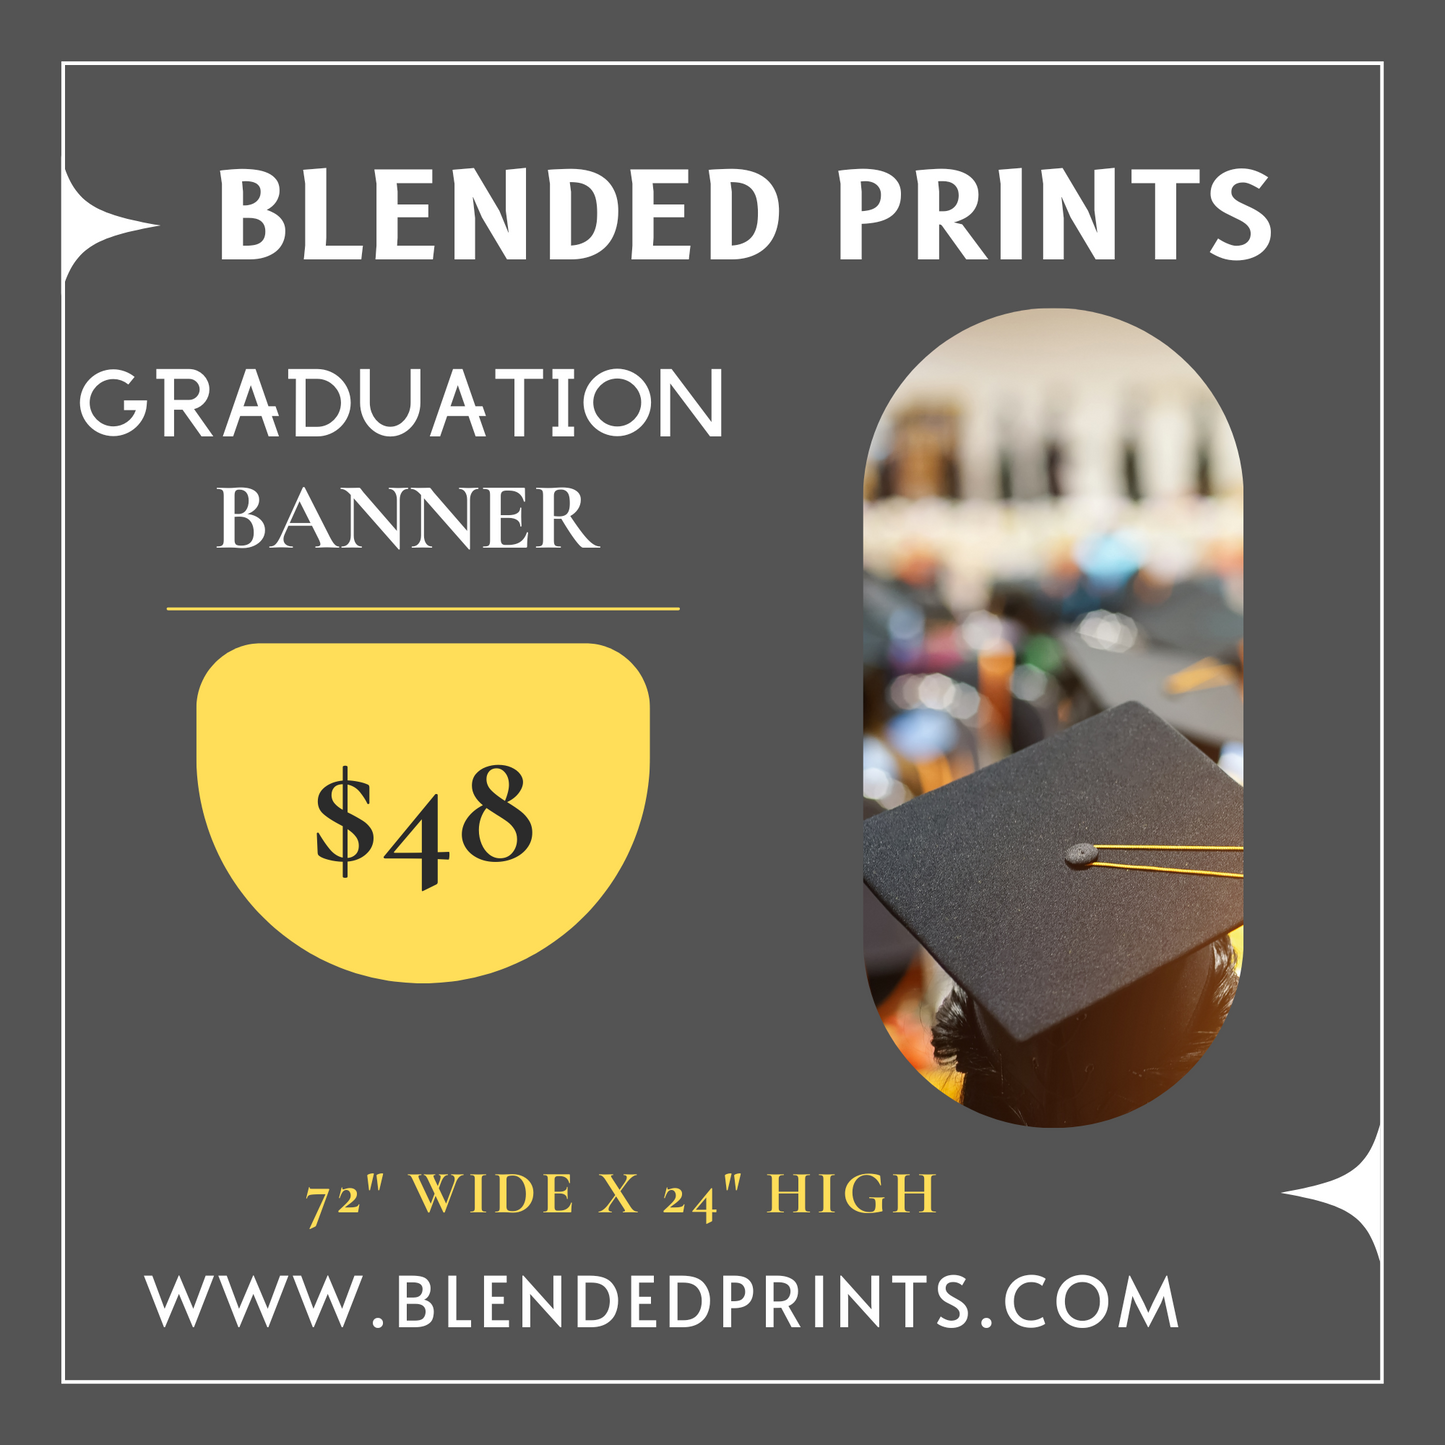 Graduation Banner - Shipped Fedex Next Day